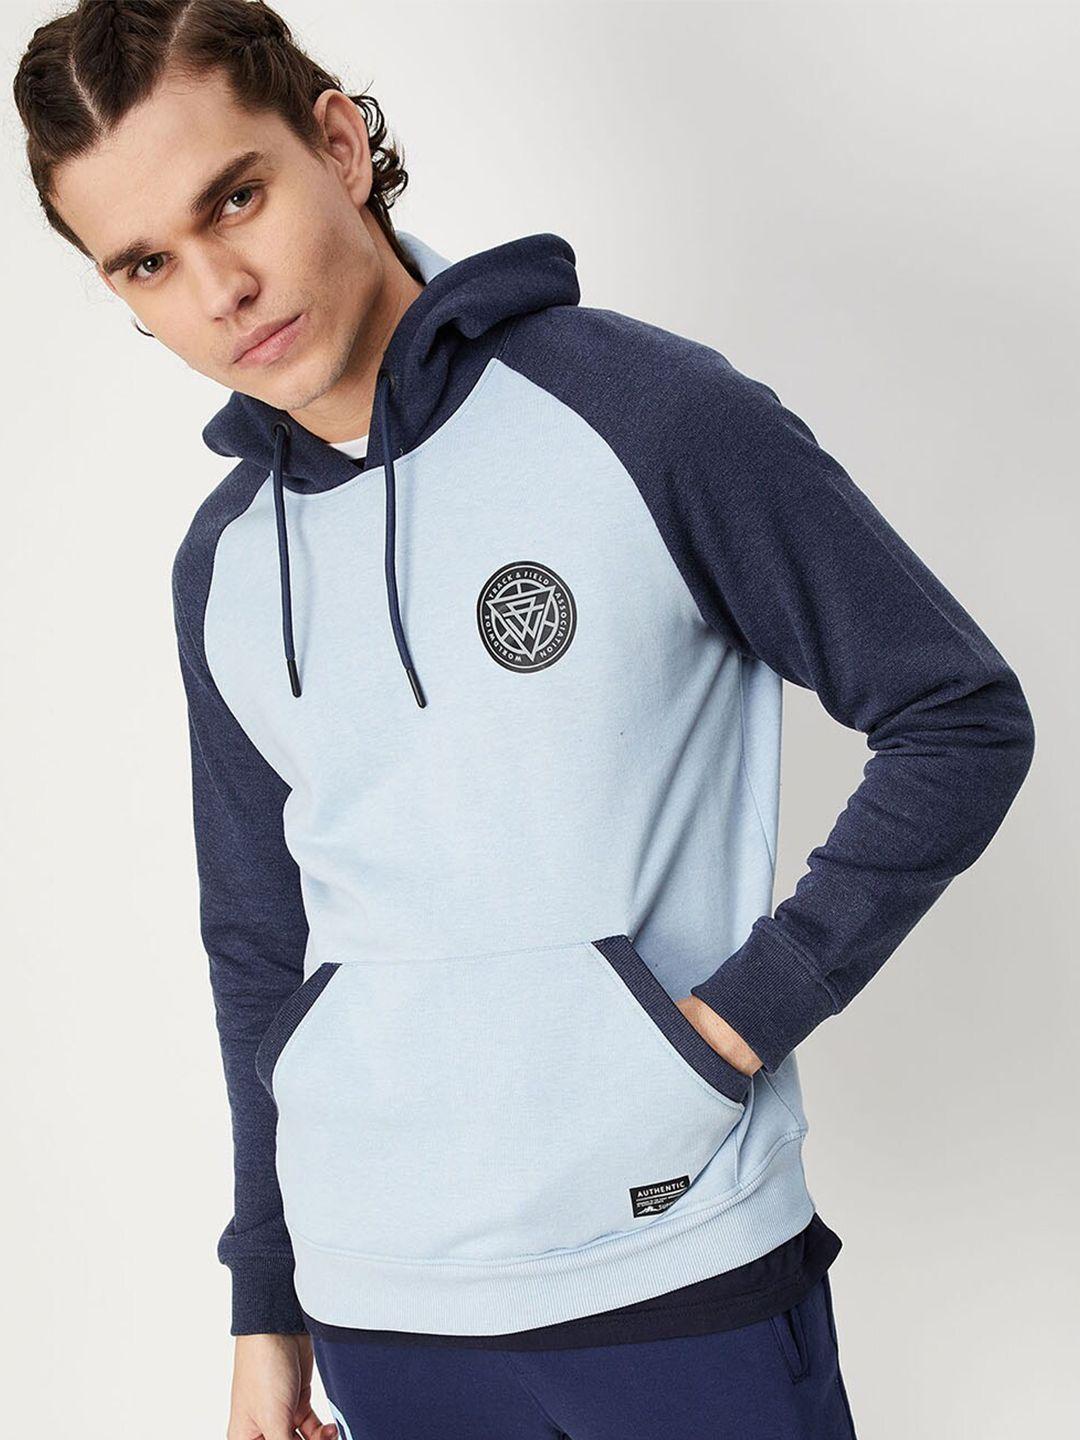 max-men-blue-colourblocked-cotton-hooded-sweatshirt